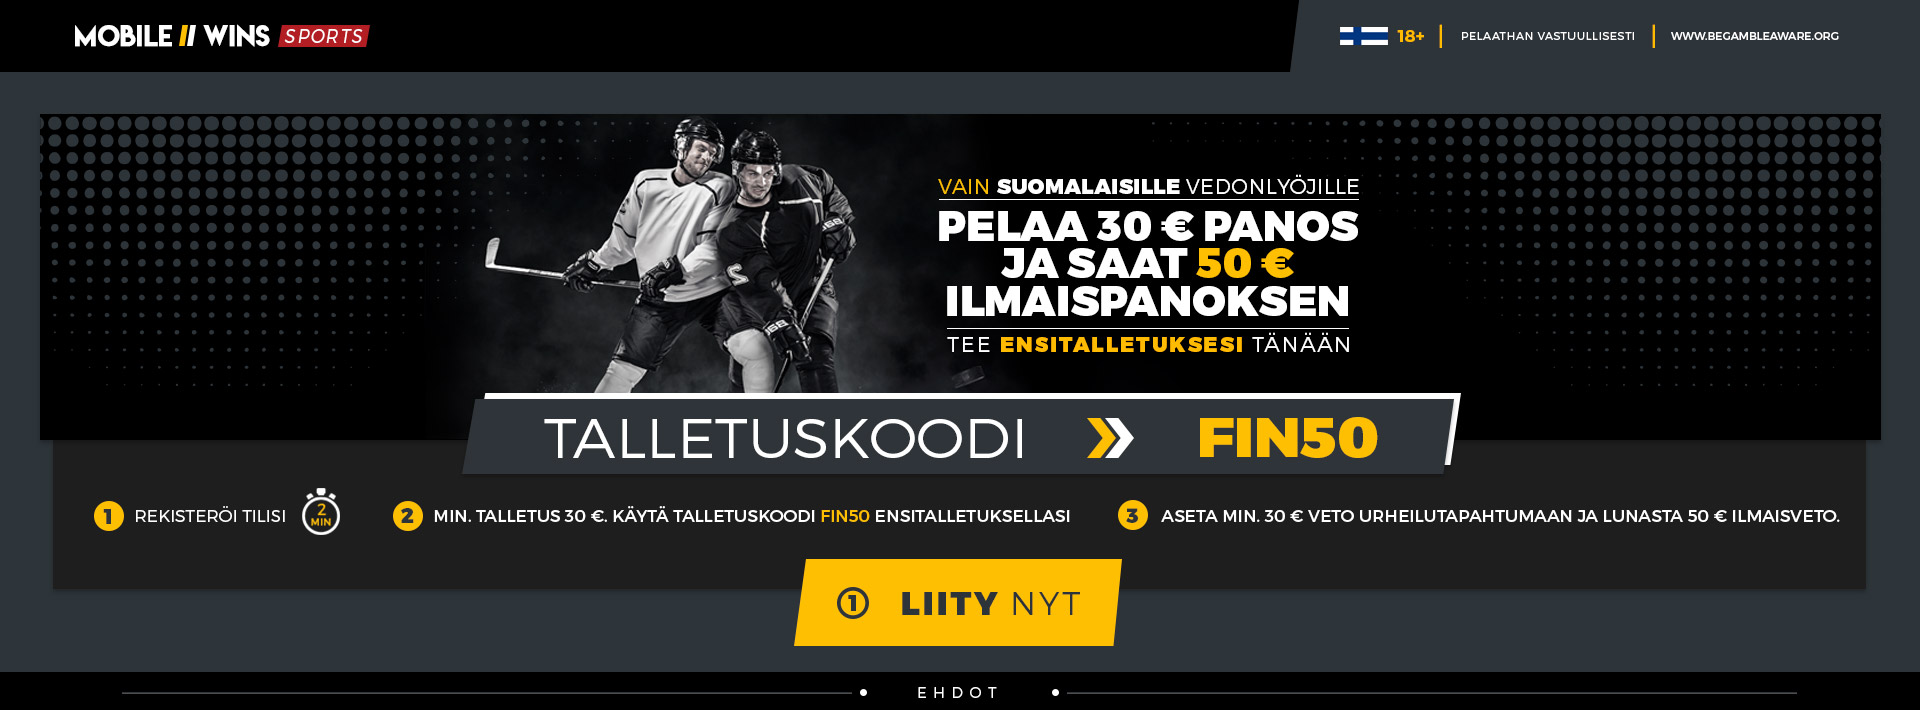 Finnish Bettors Only - Bet 30 Get 50